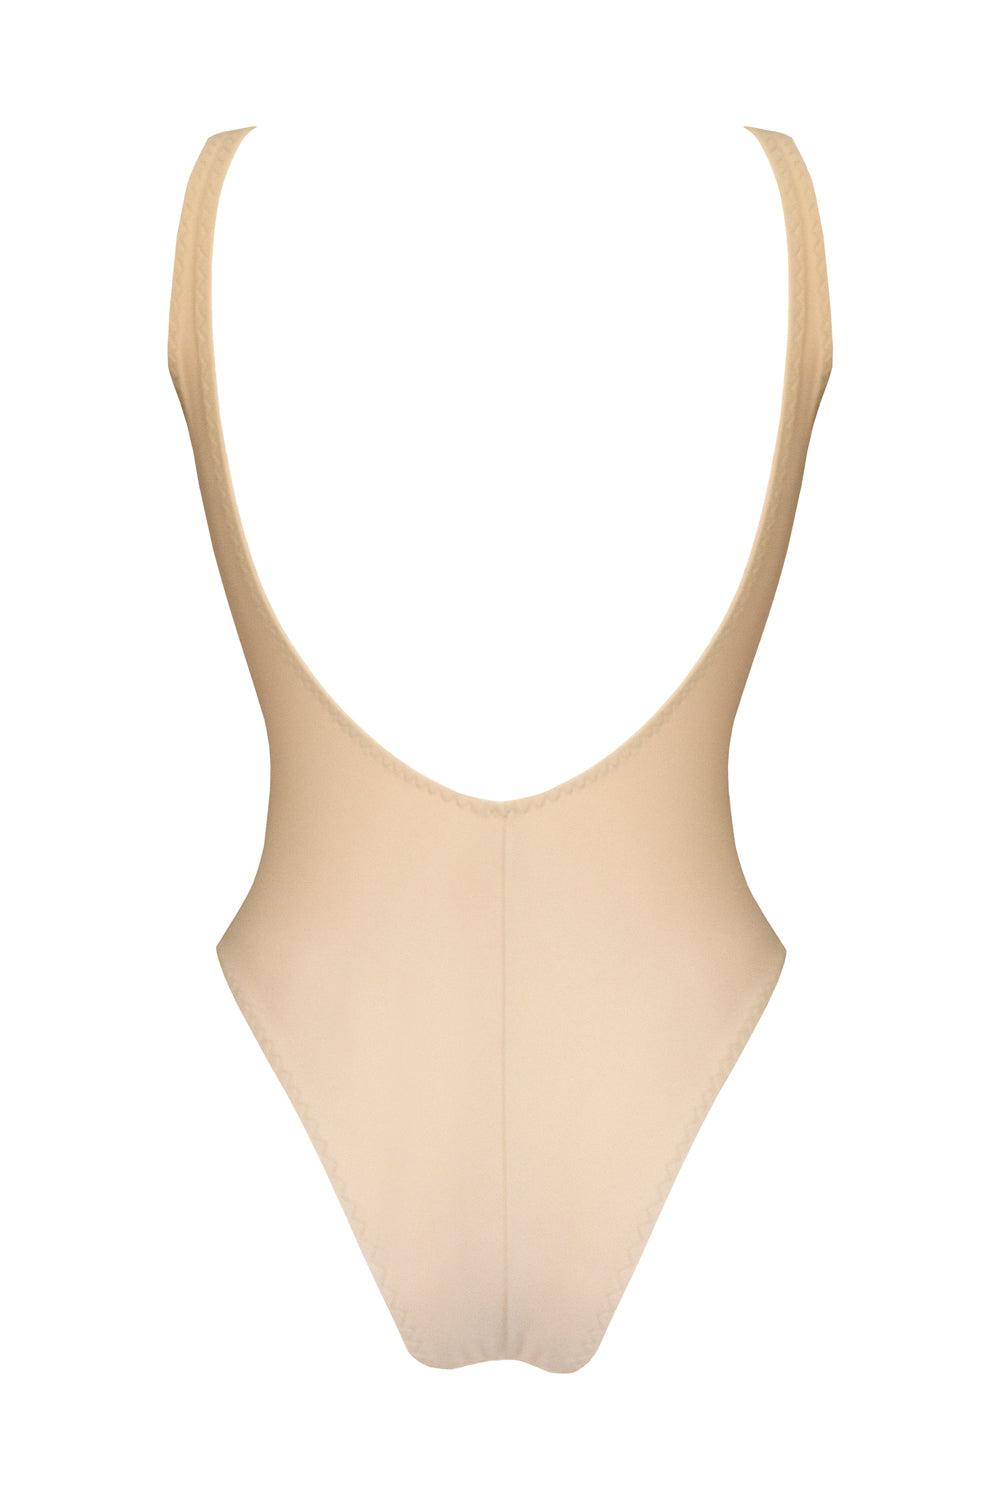 Kalisa nude swimsuit - One Piece swimsuit by Keosme. Shop on yesUndress